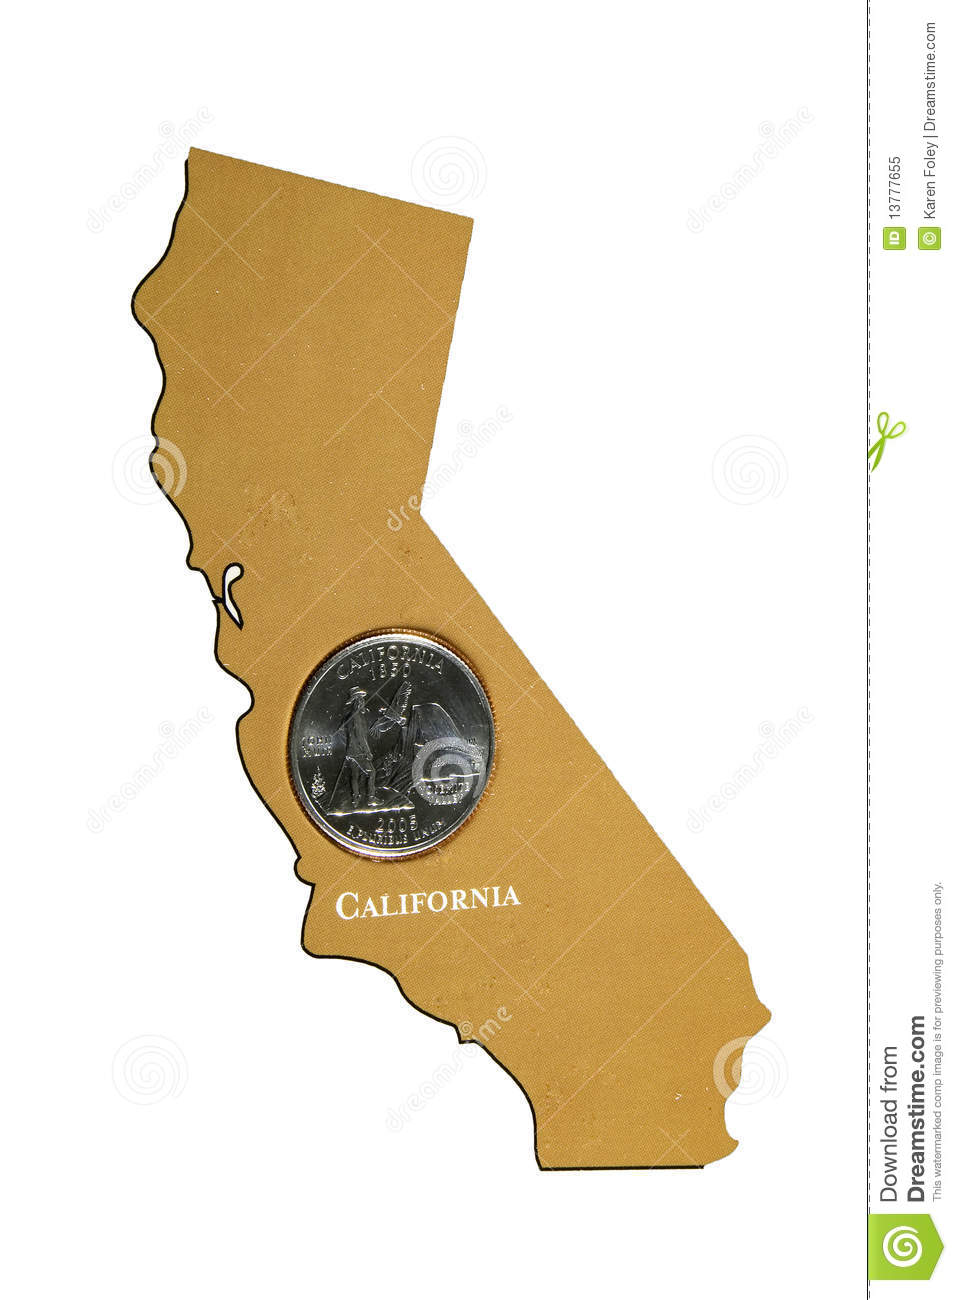 California State Quarter Royalty Free Stock Photo   Image  13777655